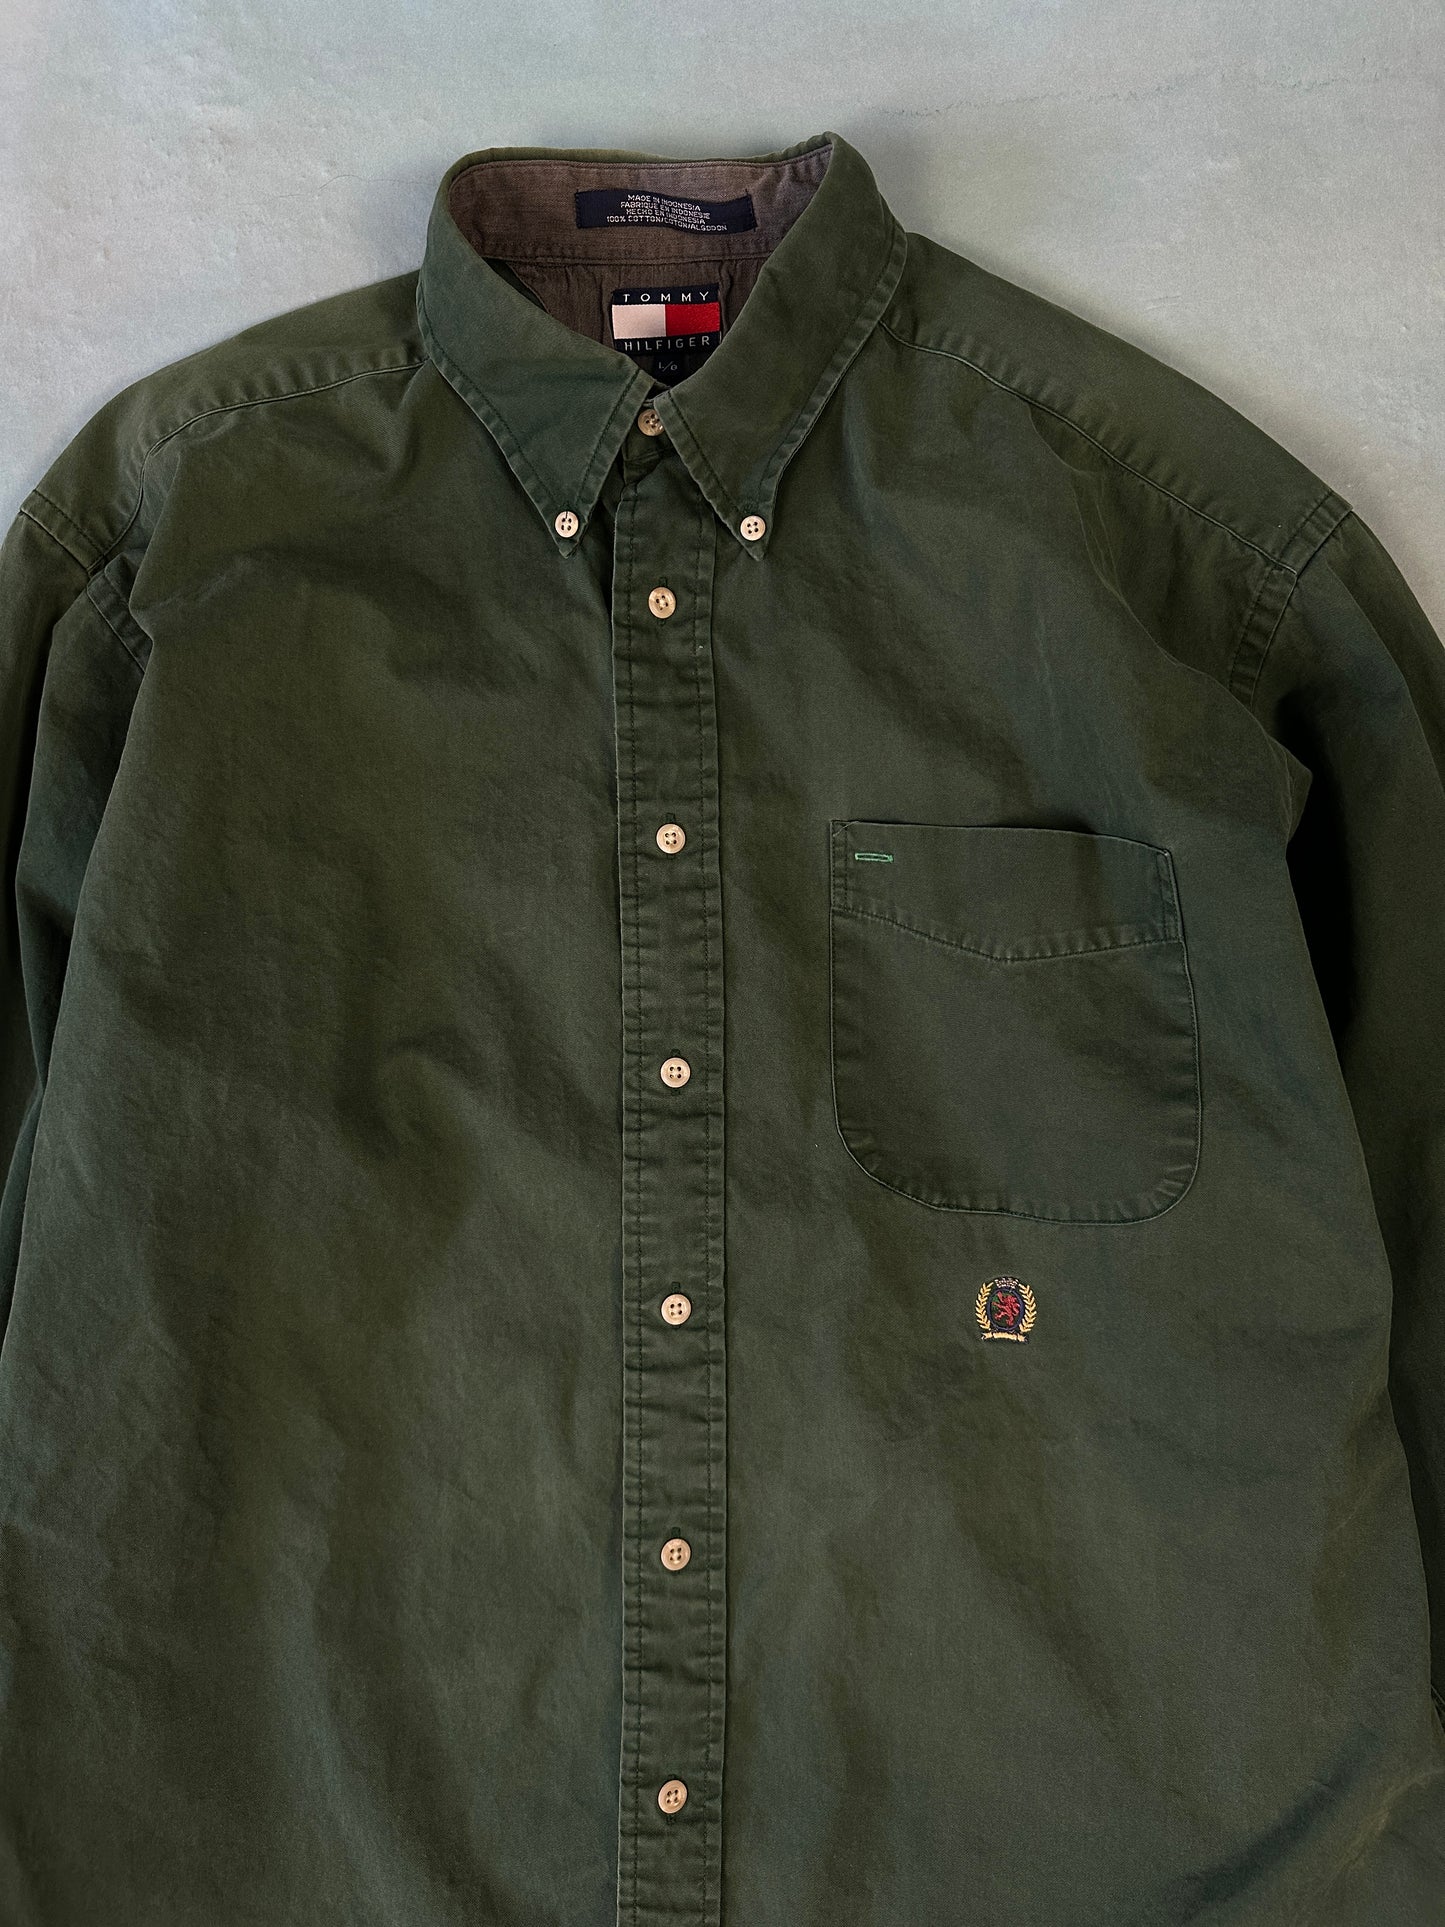 Tommy Vintage Green Shirt - L